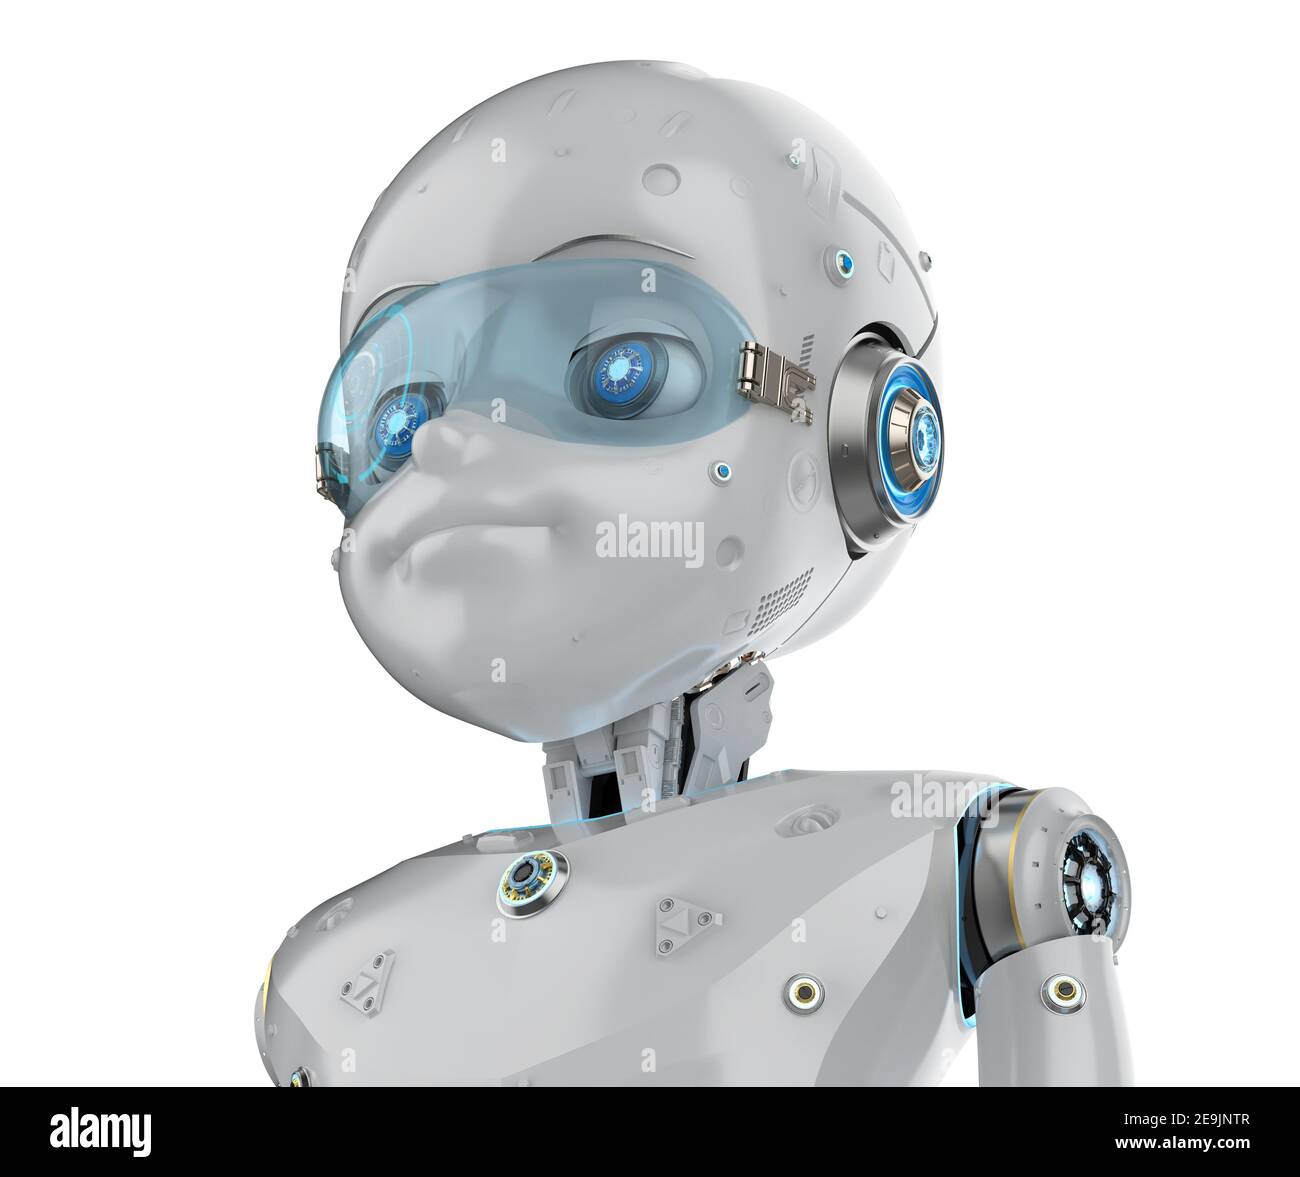 10,407 Robot Boy Cartoon Images, Stock Photos, 3D objects